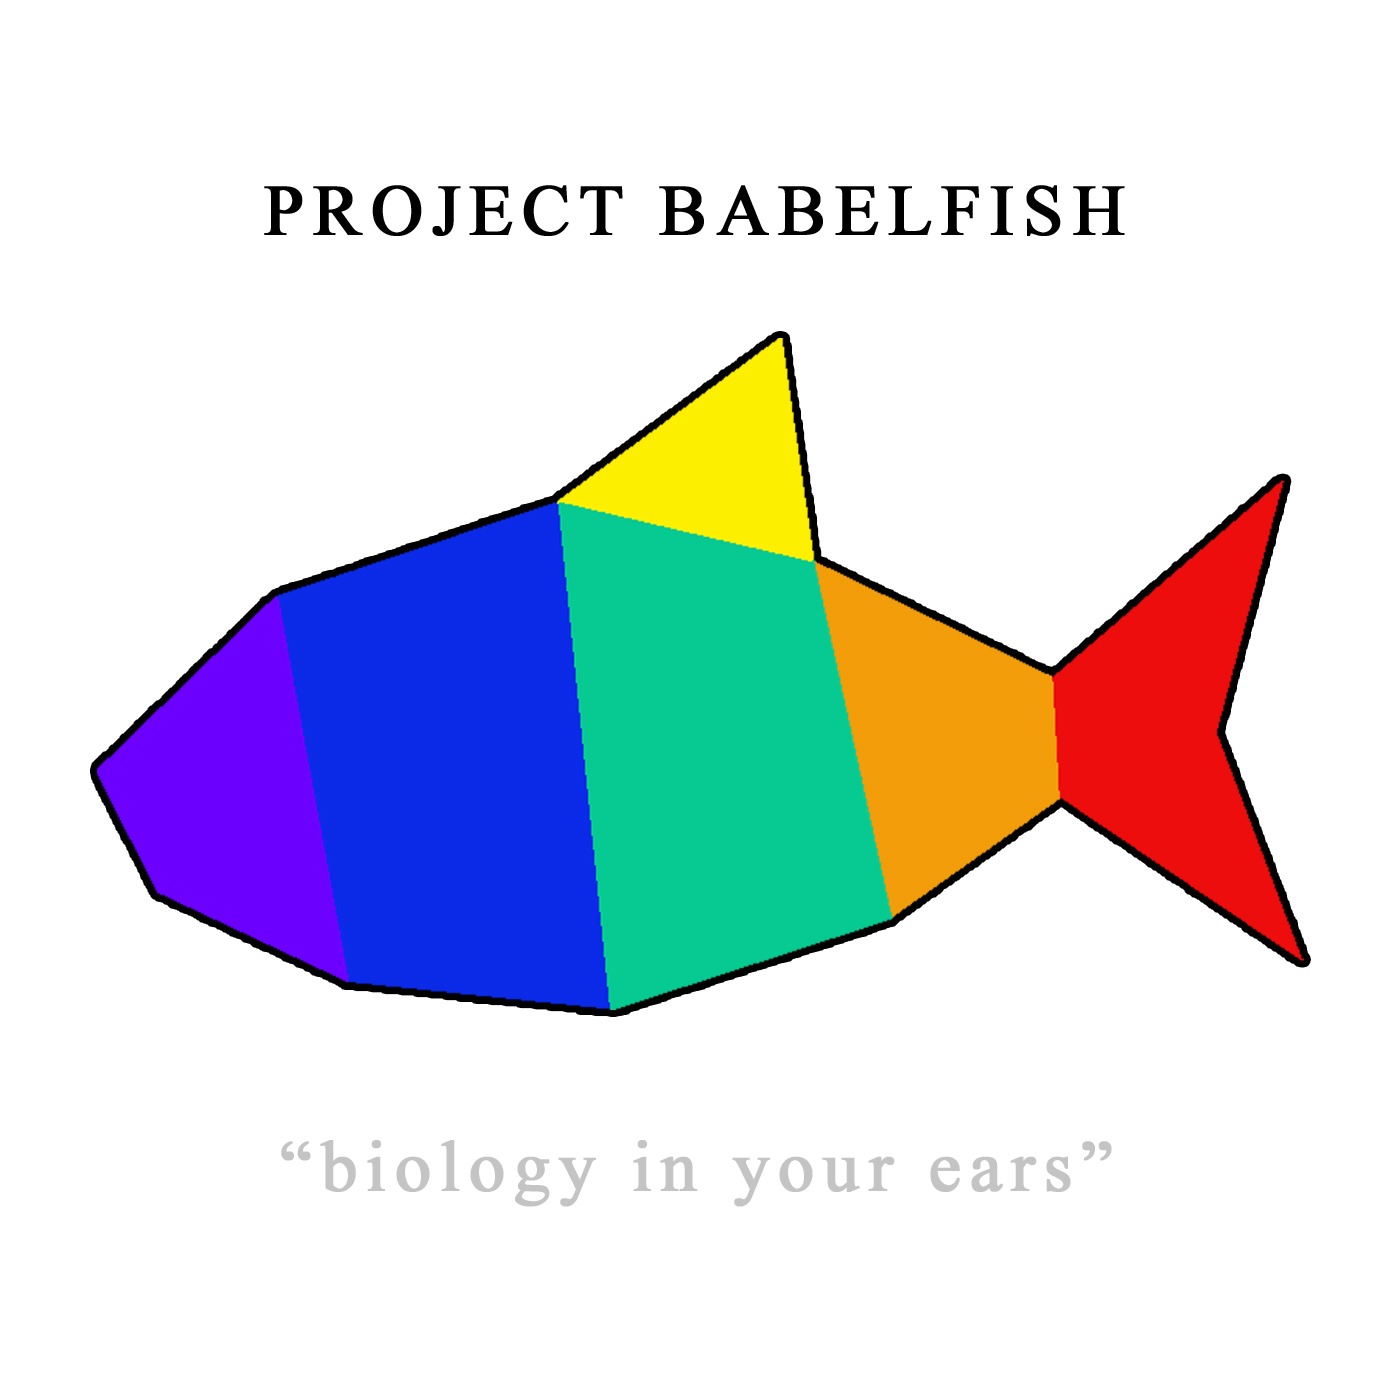 Project Babelfish